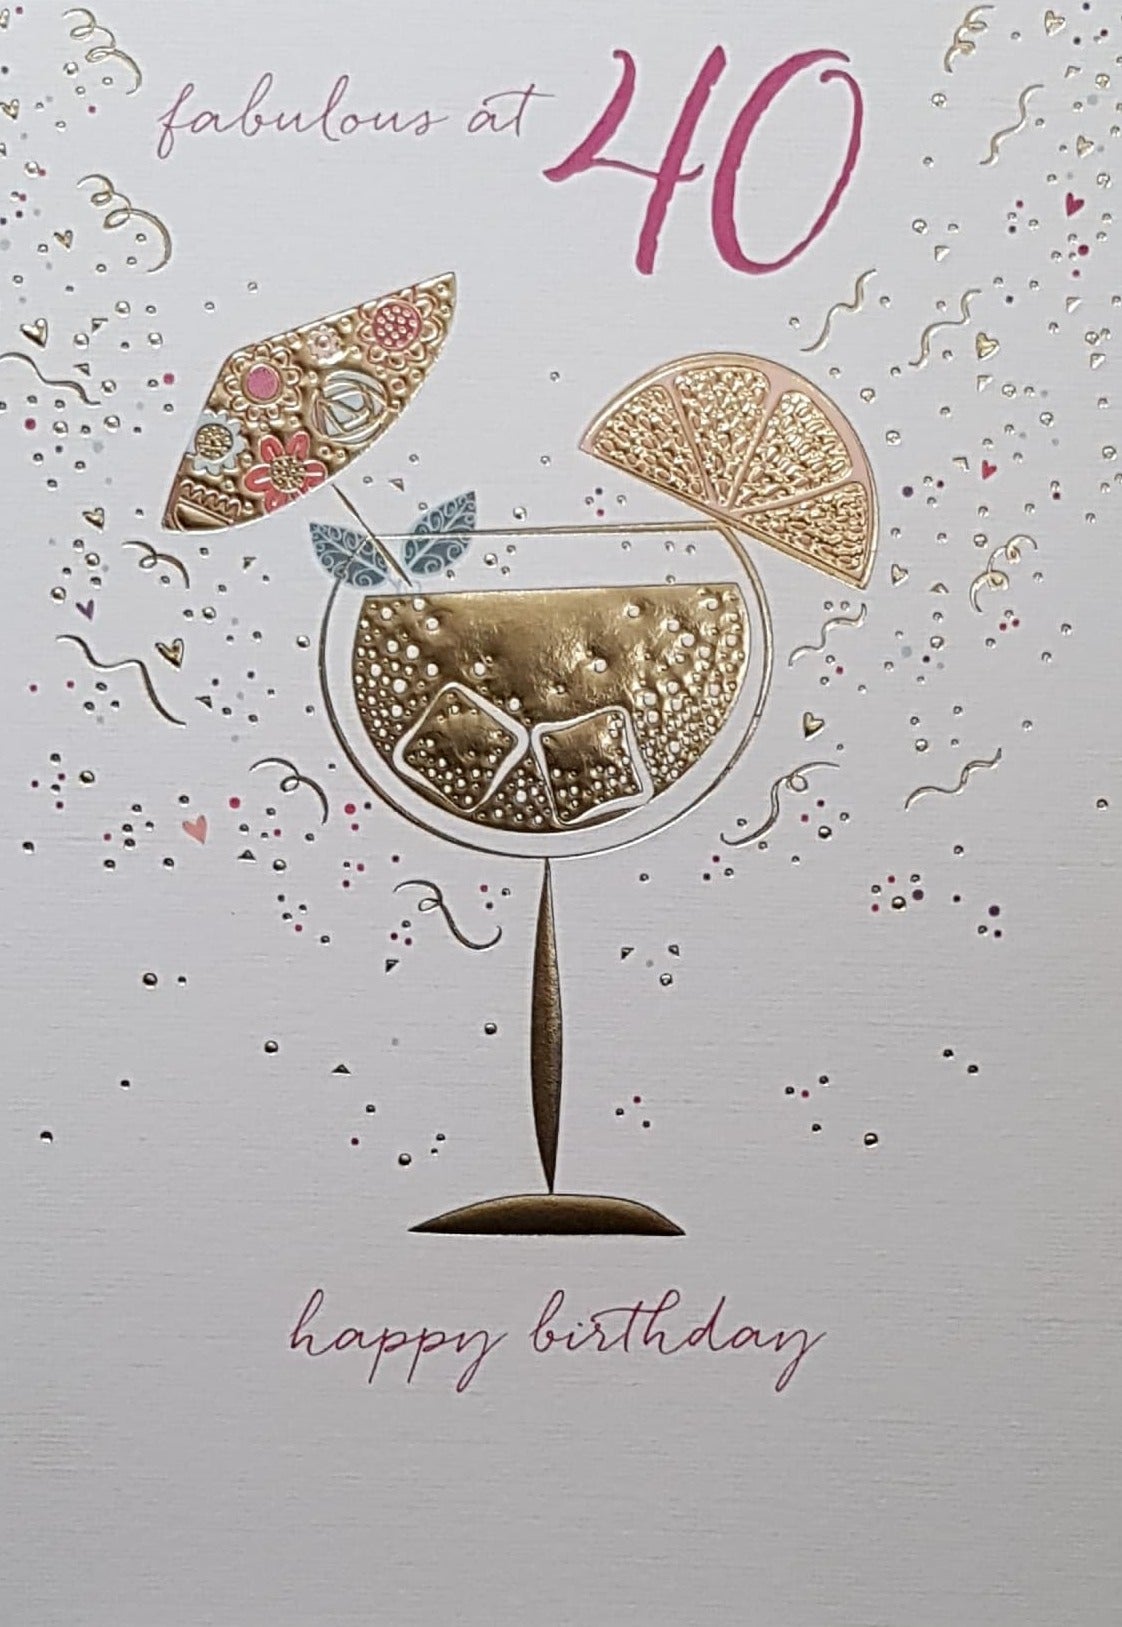 Age 40 Birthday Card - A Gold Martini Glass & A Lemon Slice